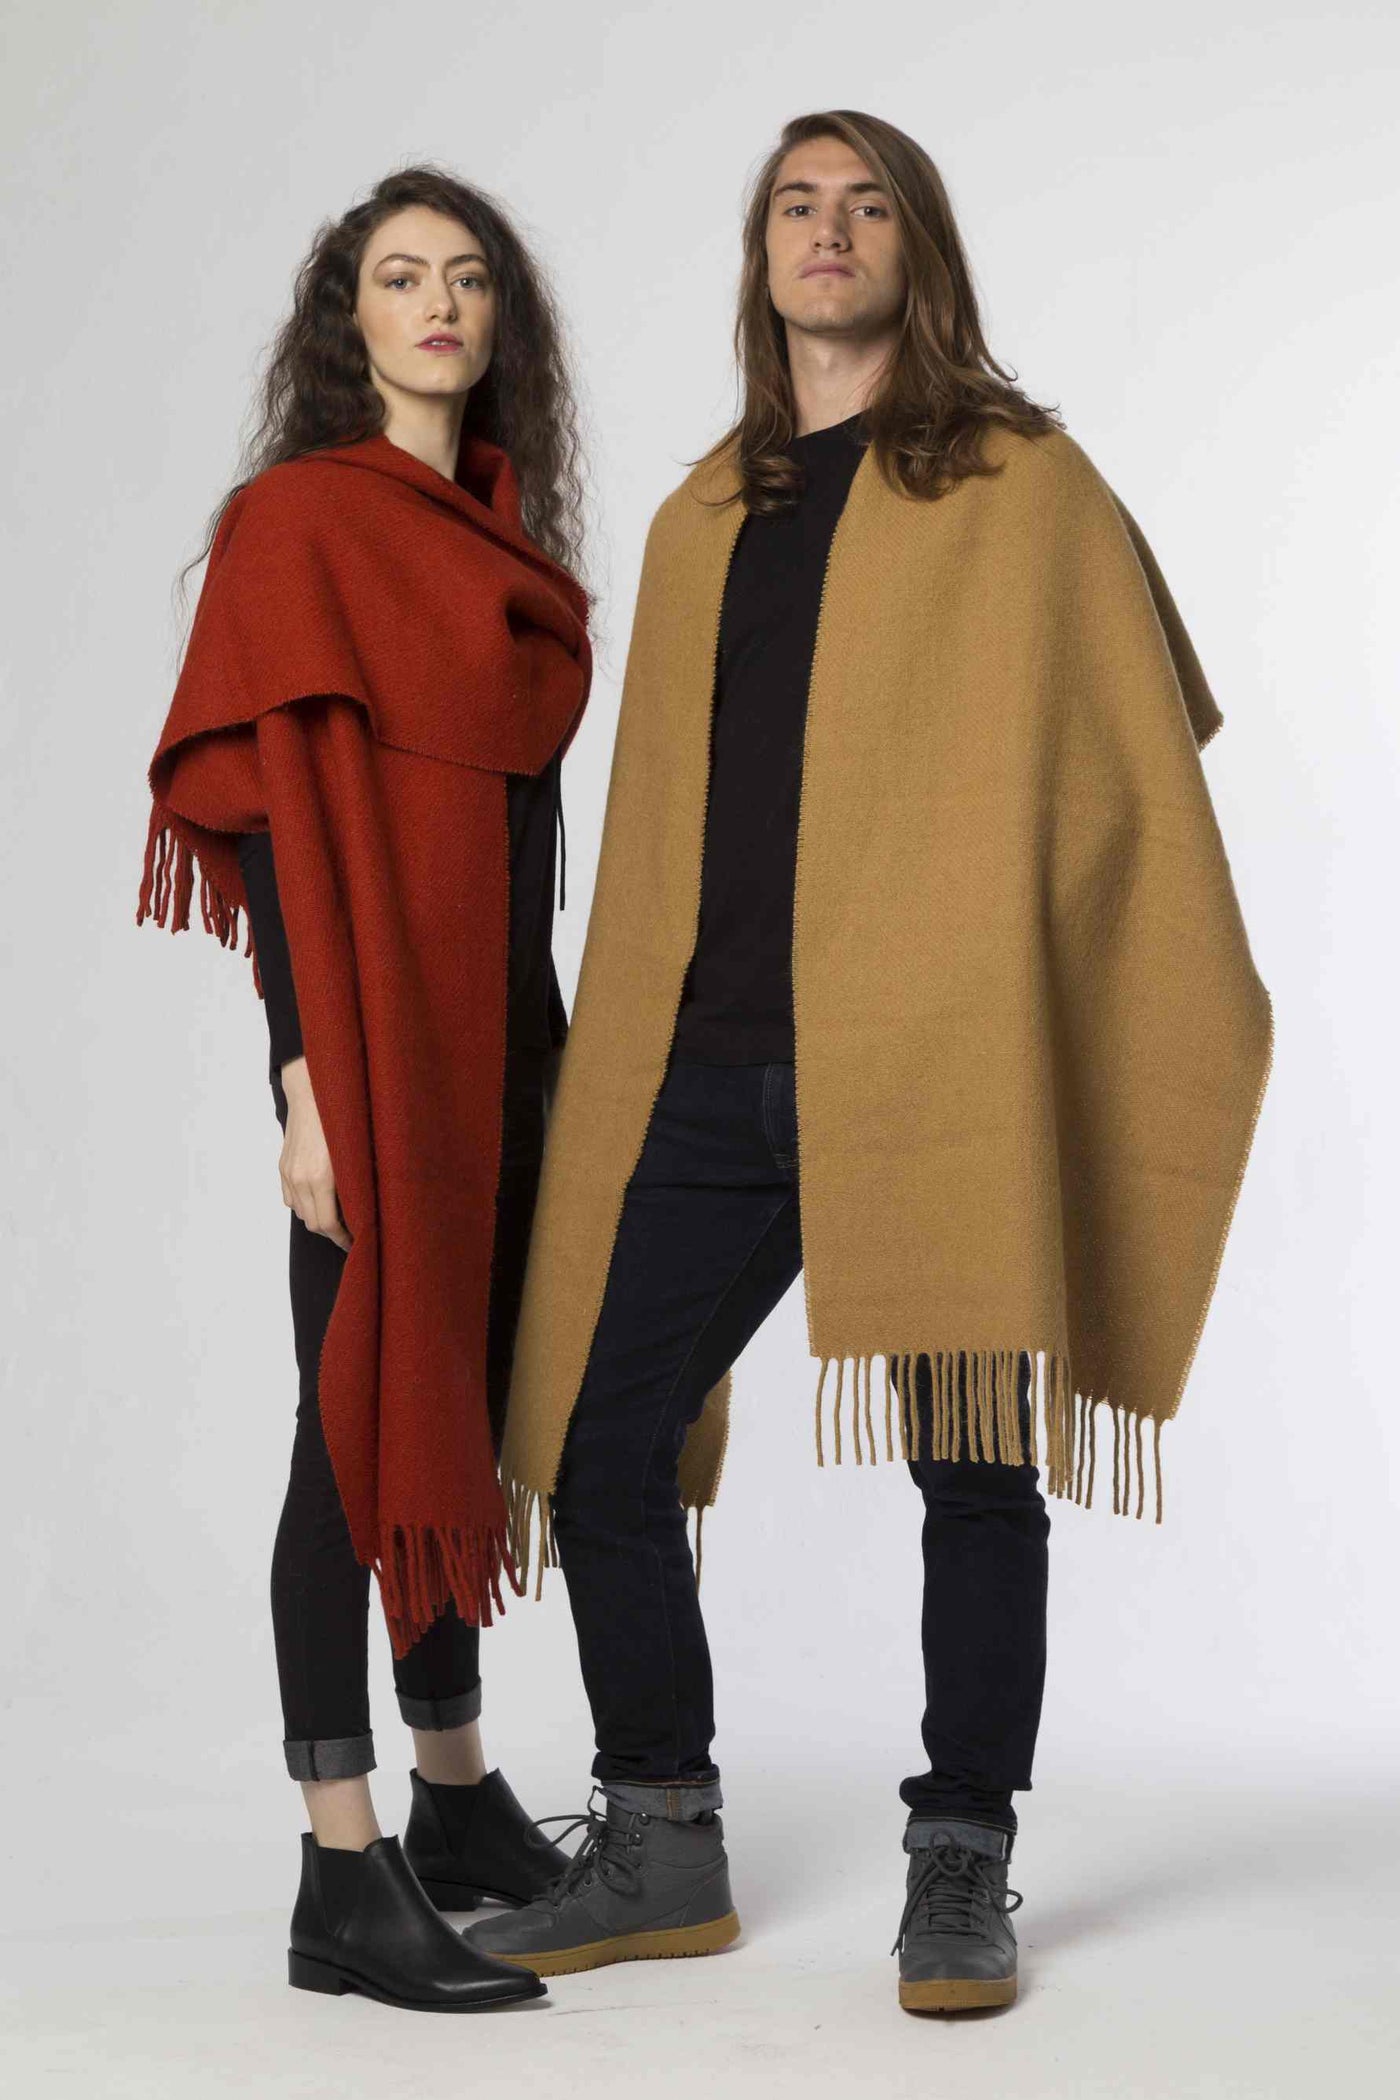 Llama wool scarf in one color